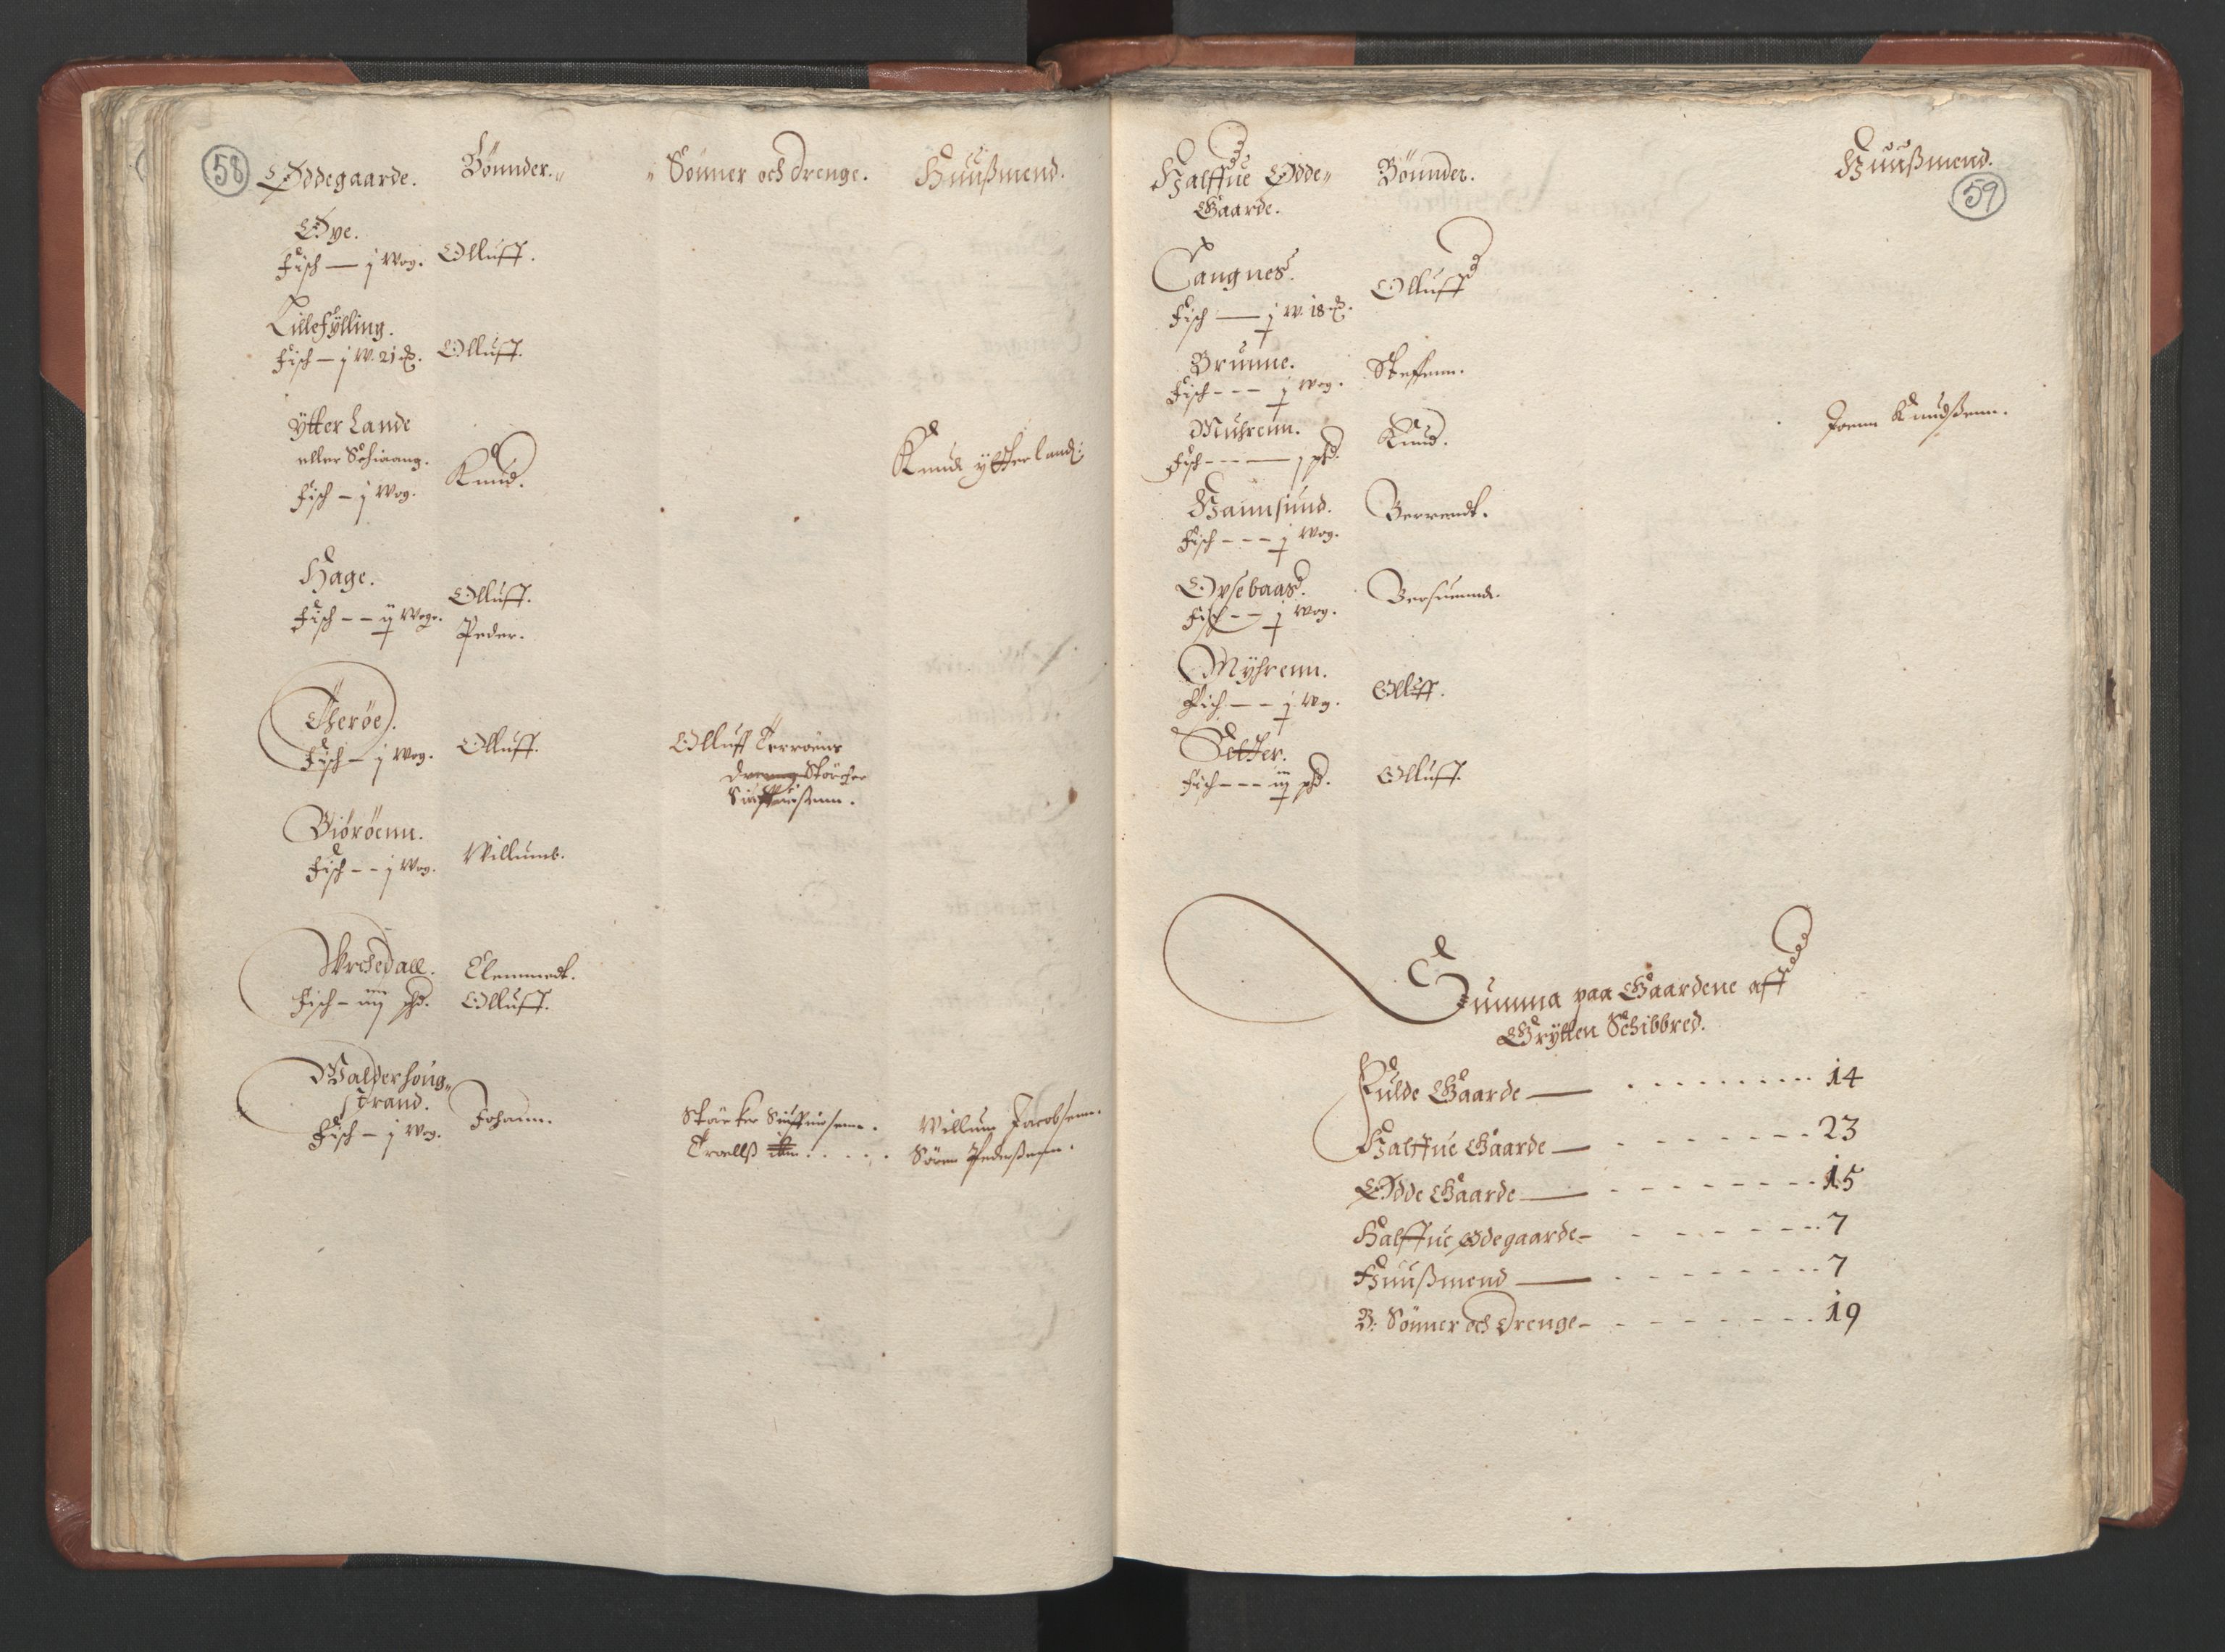 RA, Fogdenes og sorenskrivernes manntall 1664-1666, nr. 16: Romsdal fogderi og Sunnmøre fogderi, 1664-1665, s. 58-59